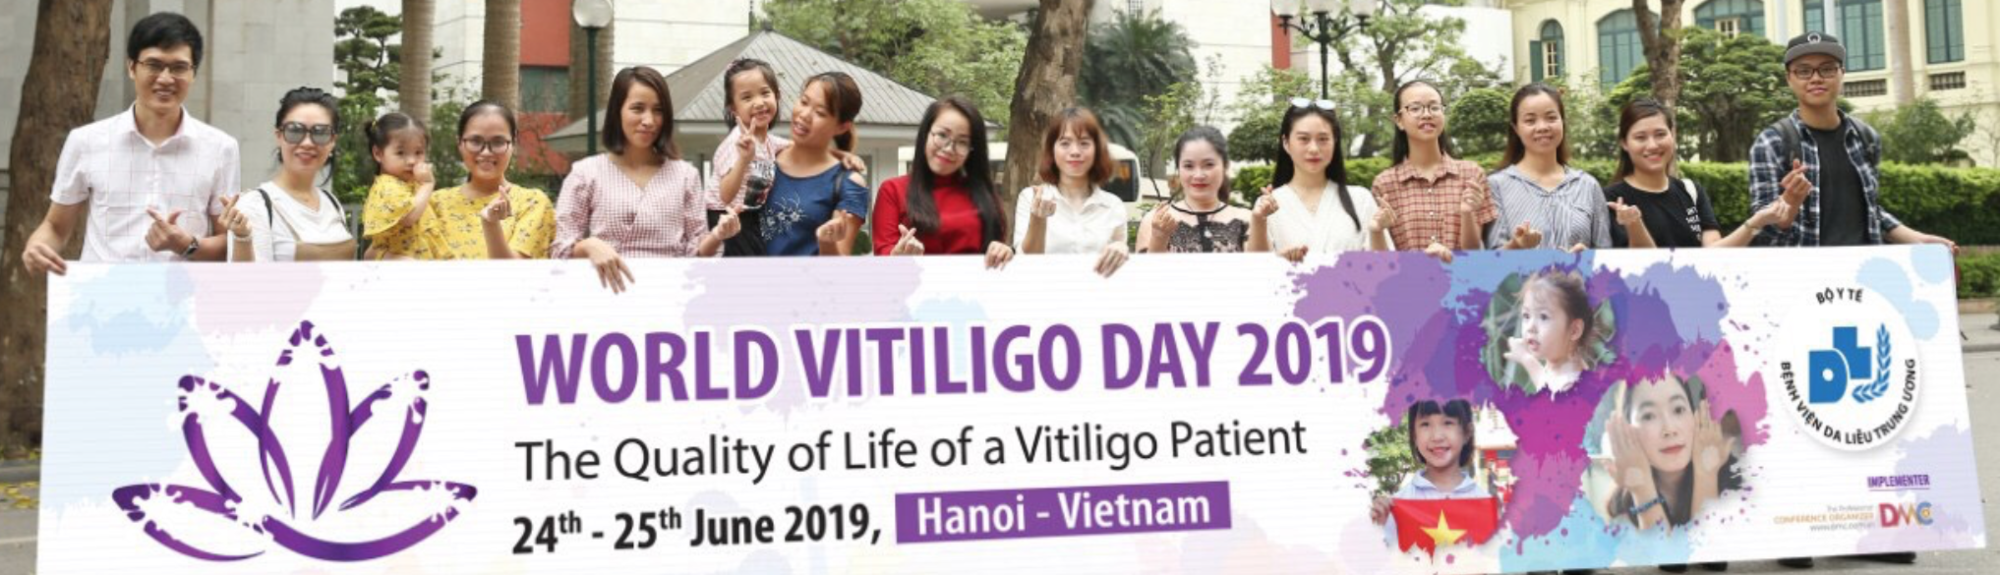 World_Vitiligo_Day_Hanoi_2019